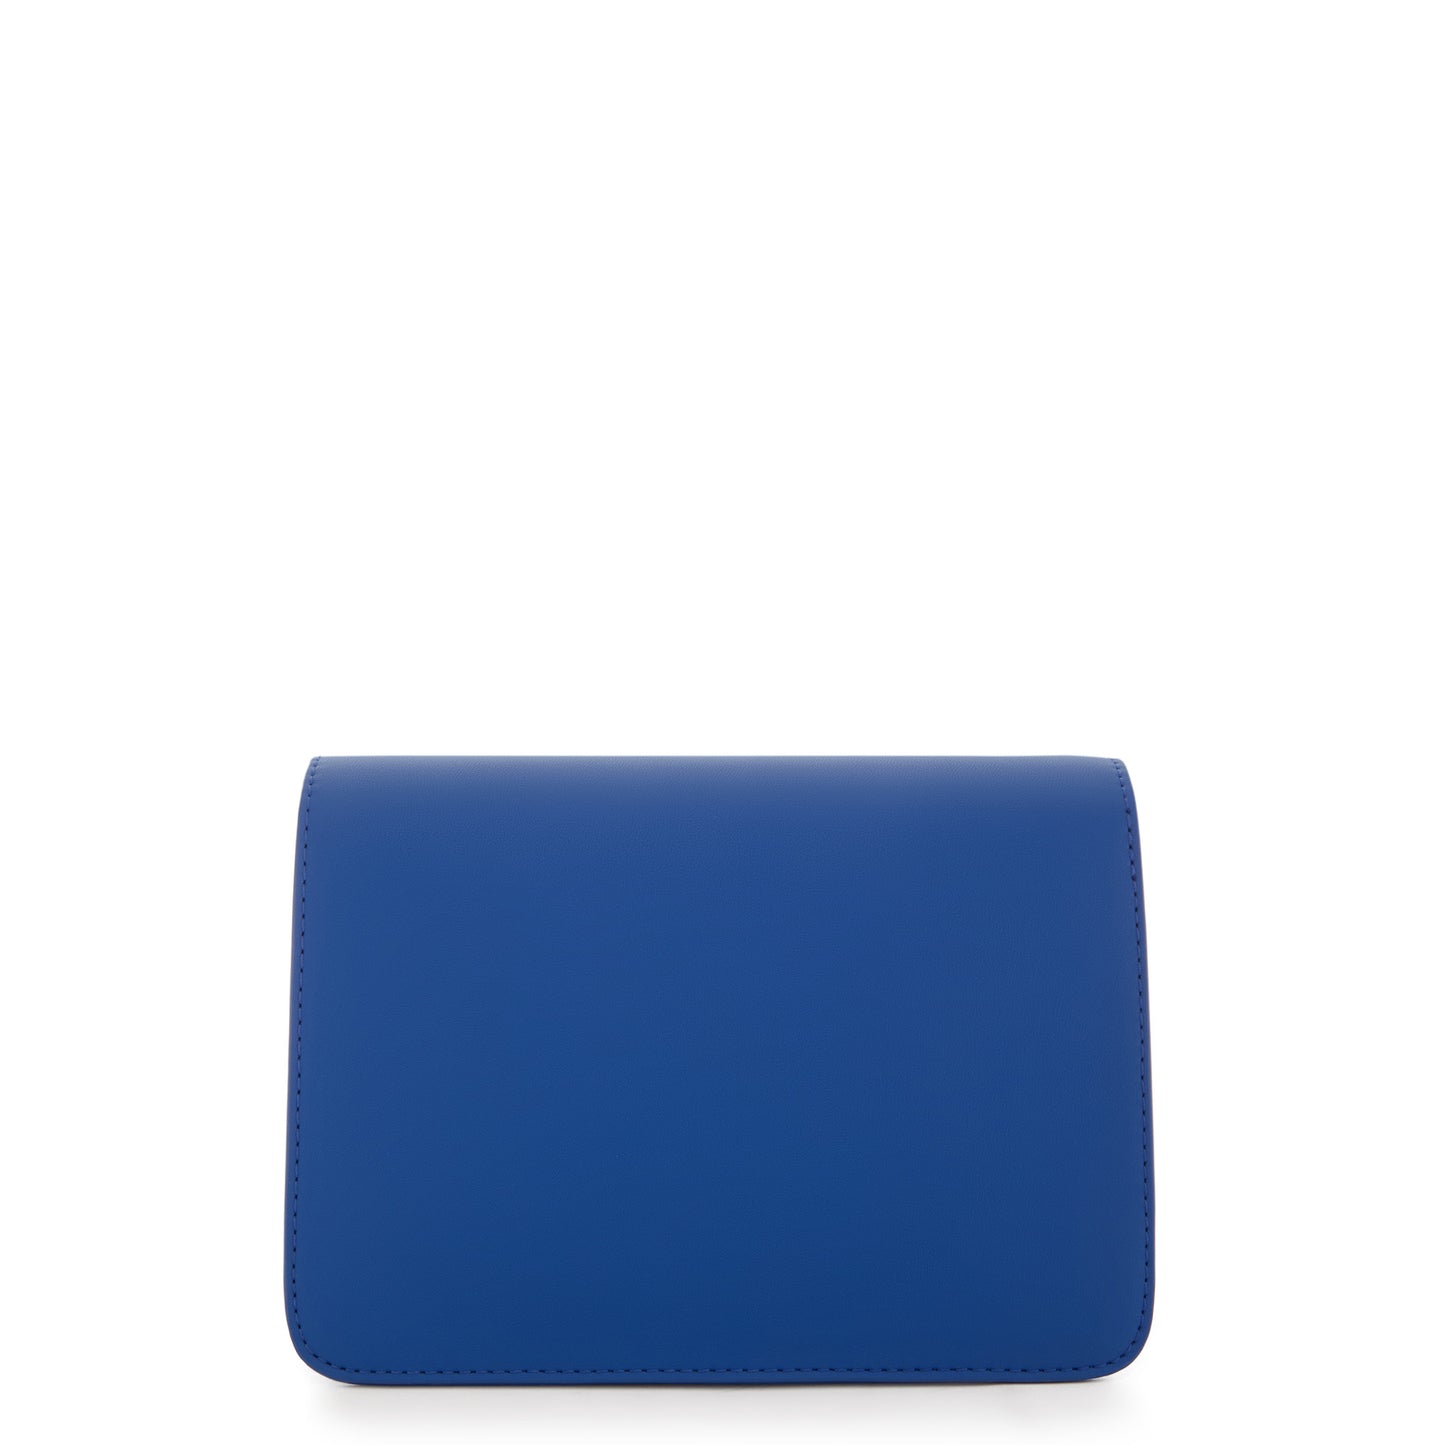 Essential Bag blå crossbody taske